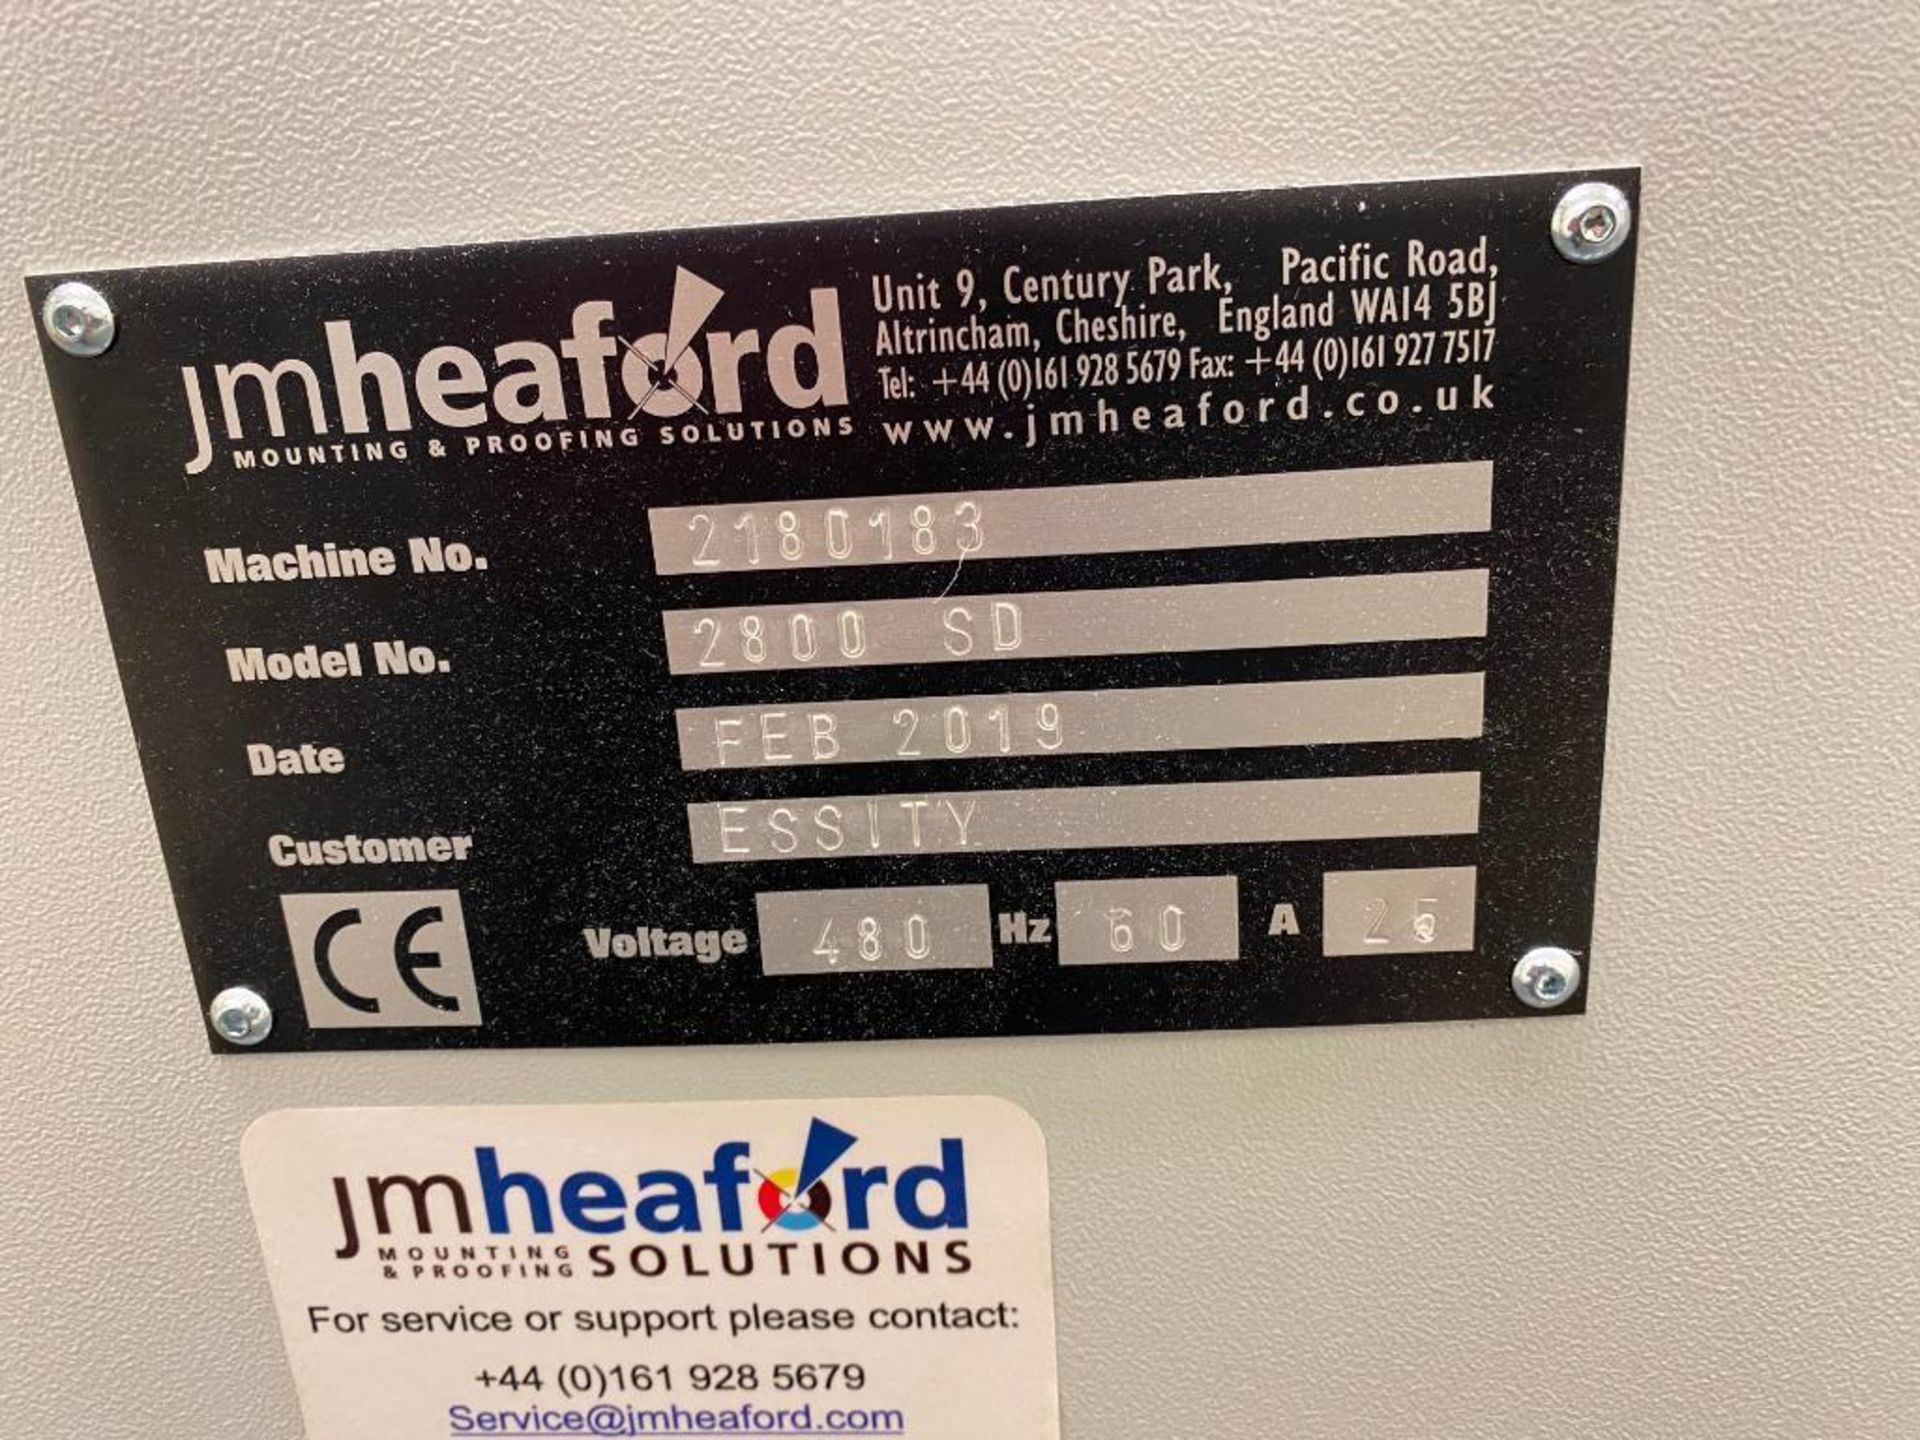 2019 JM Heaford Pre-Press Unit, Model 2800 SD, Machine No. 2180183 - Image 4 of 4